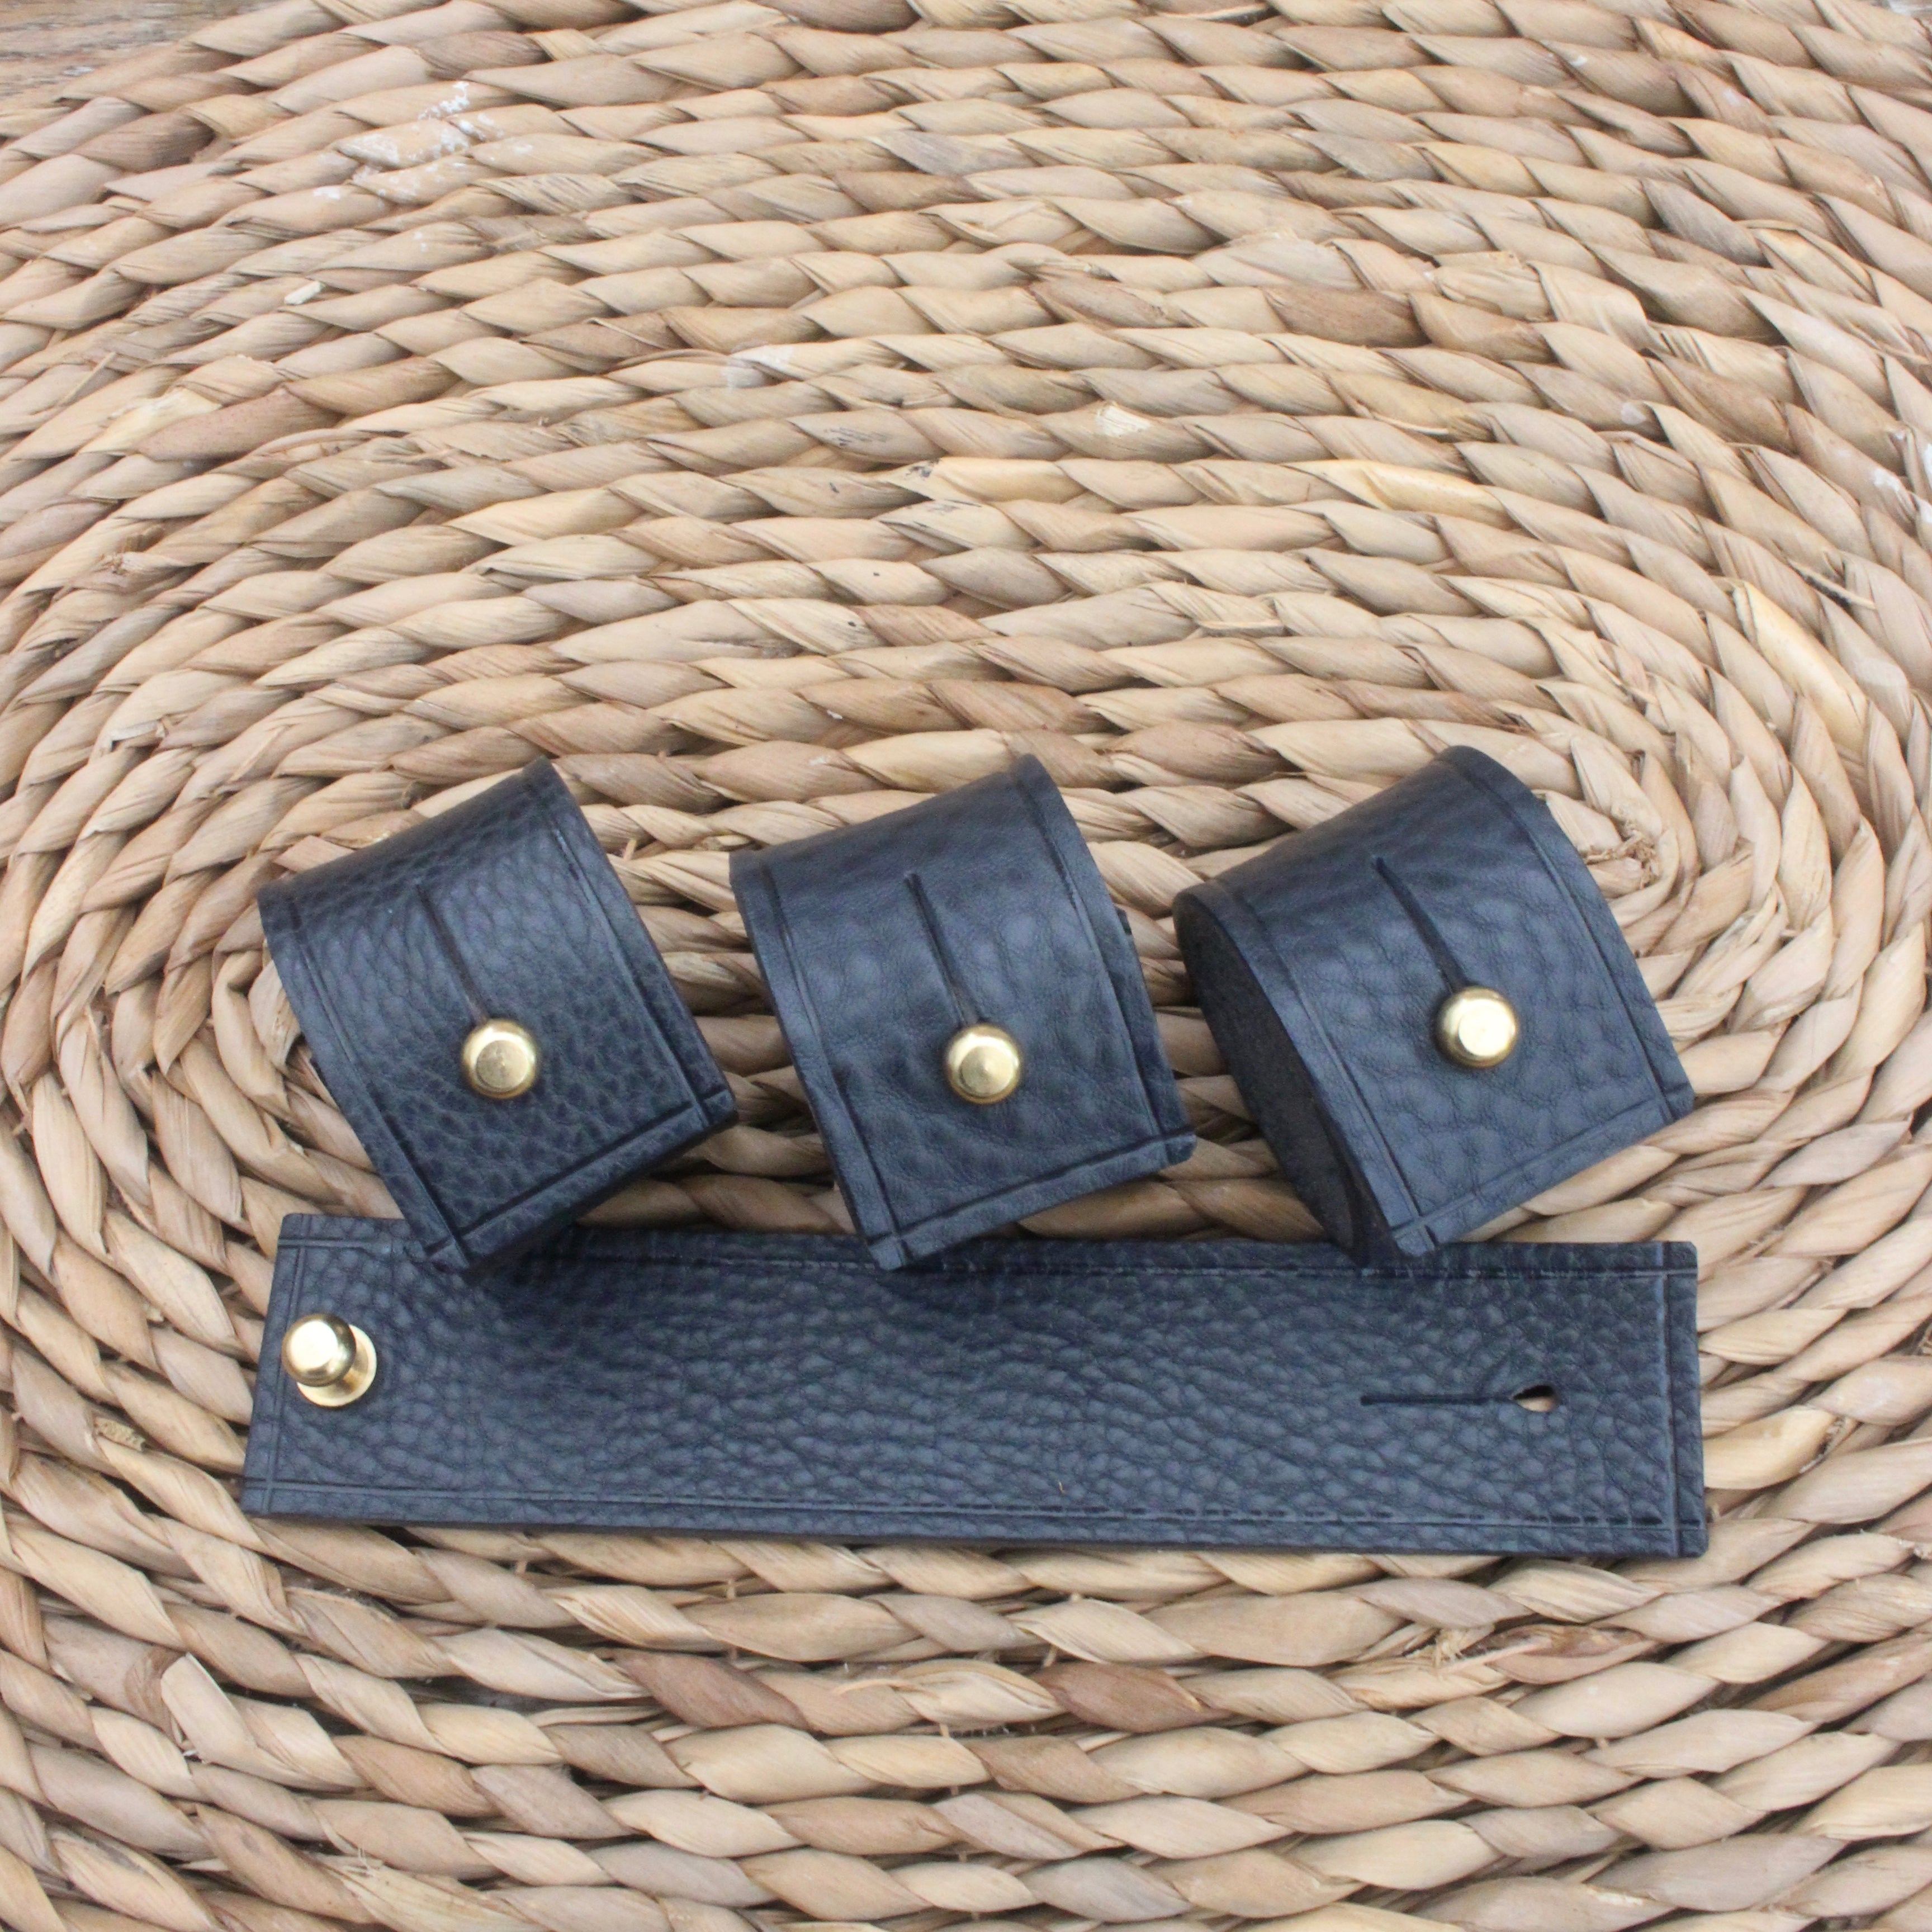 Napkin Rings - Navy Tumble leather